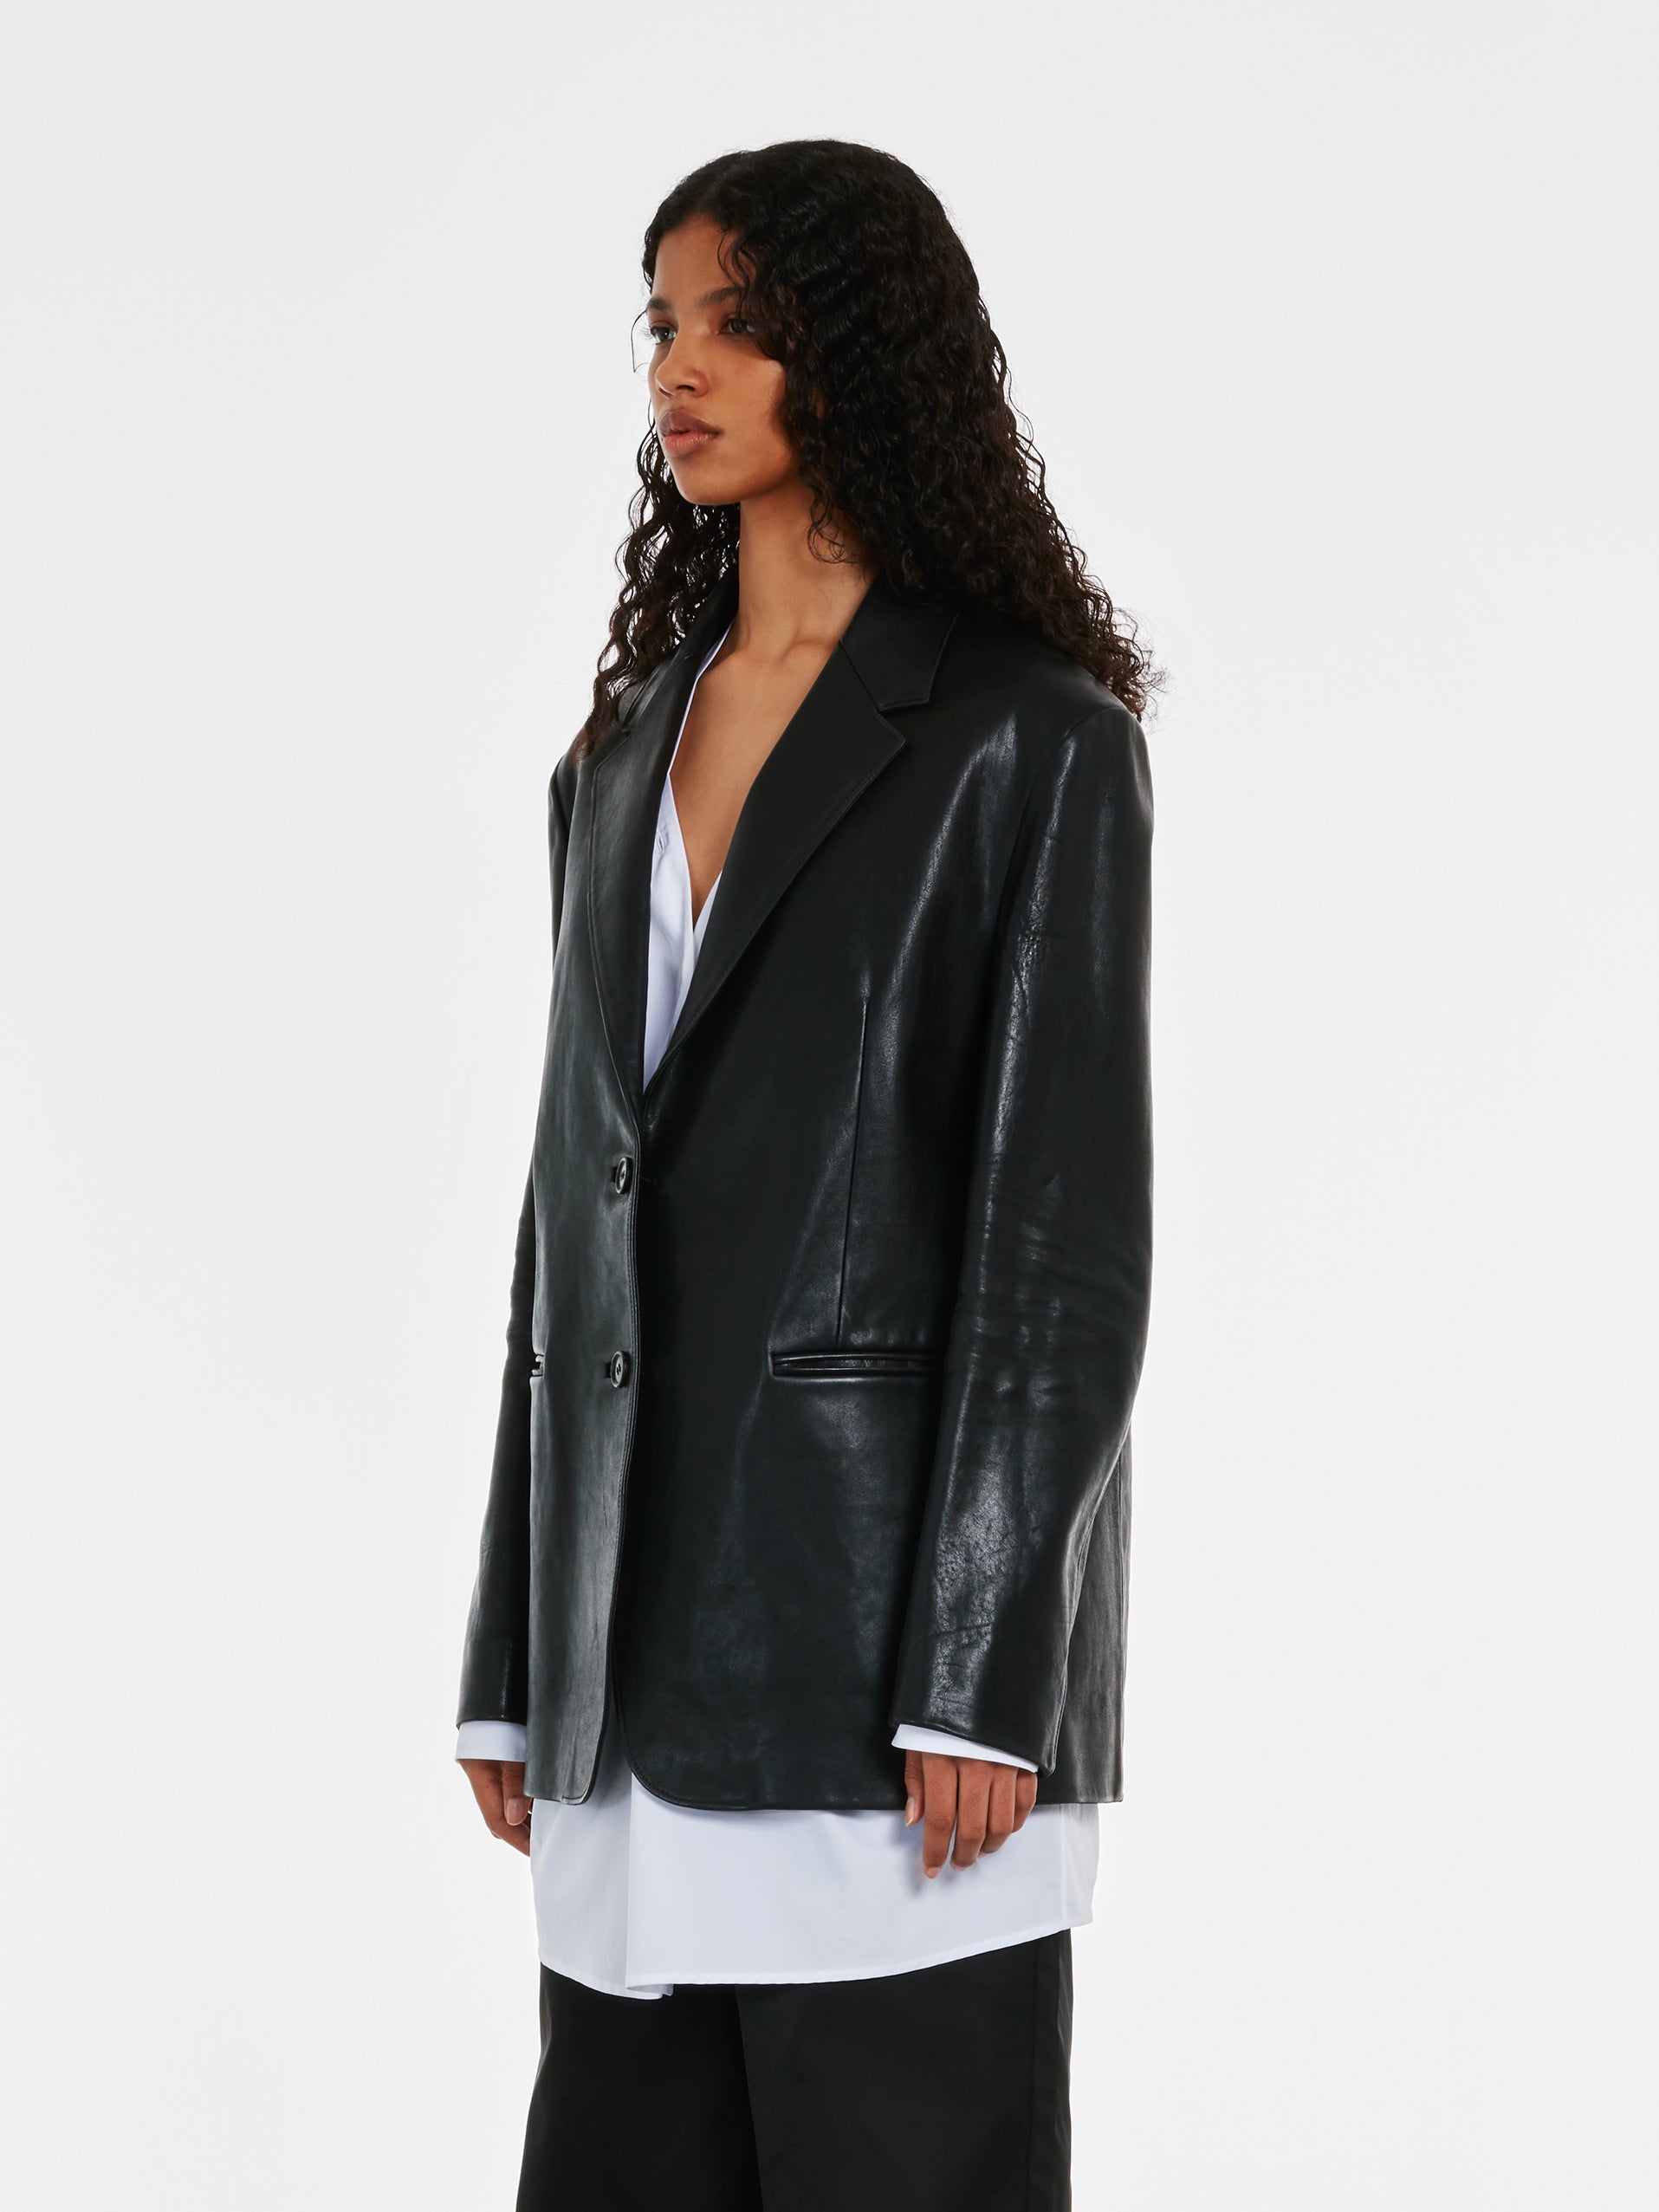 Prada - Women’s Leather Jacket - (Black) view 2